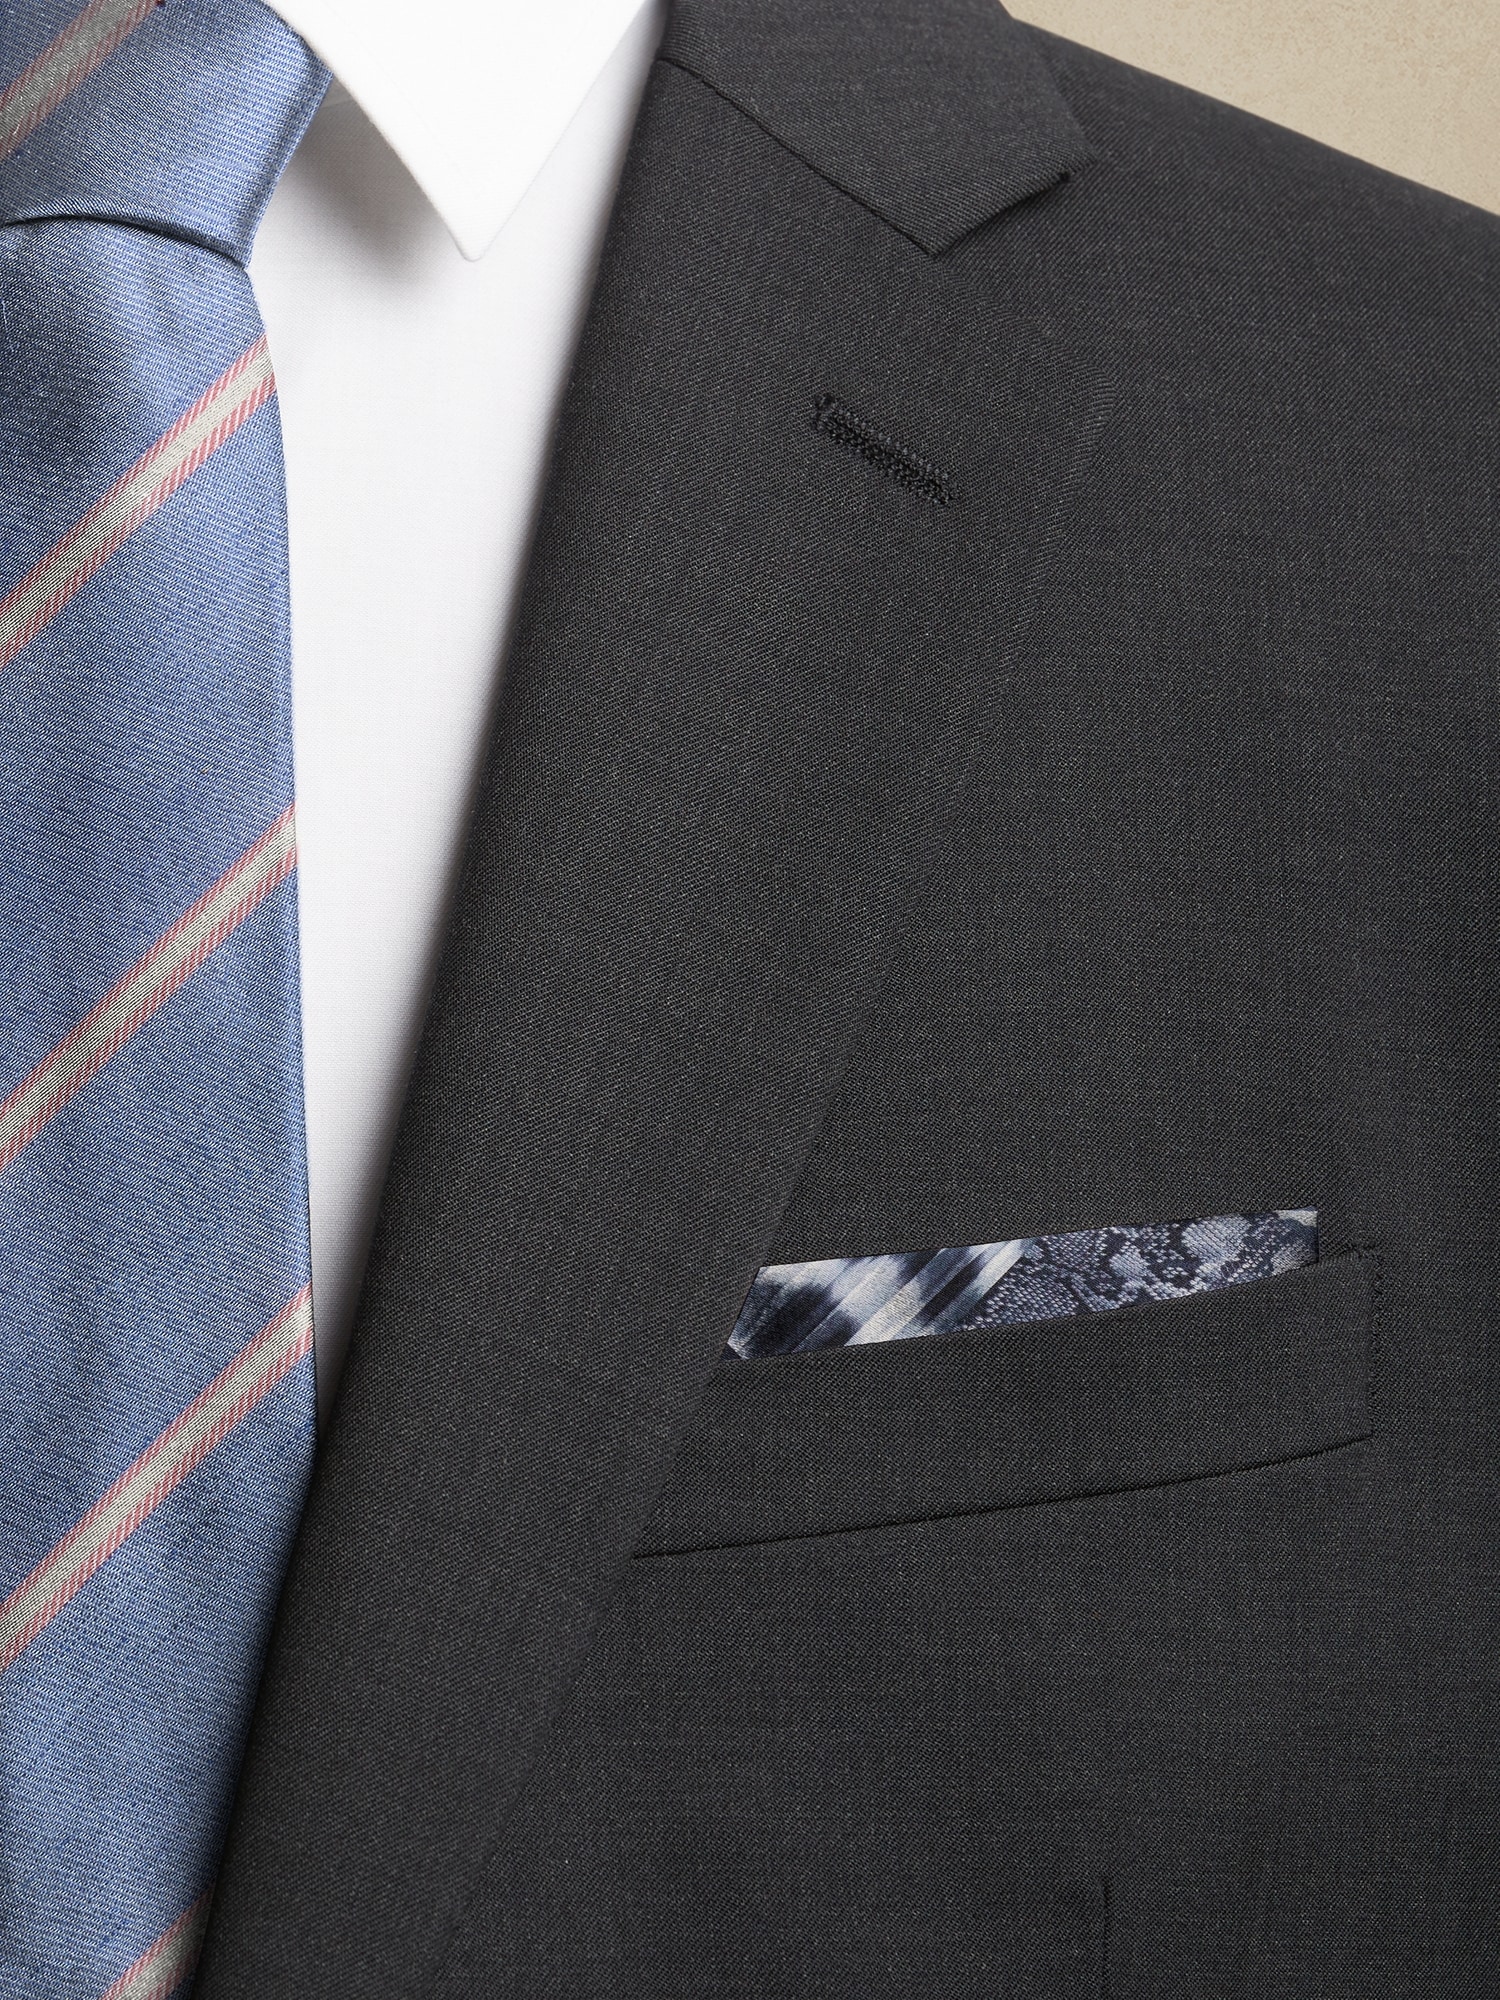 Blue/Pink Striped Tie